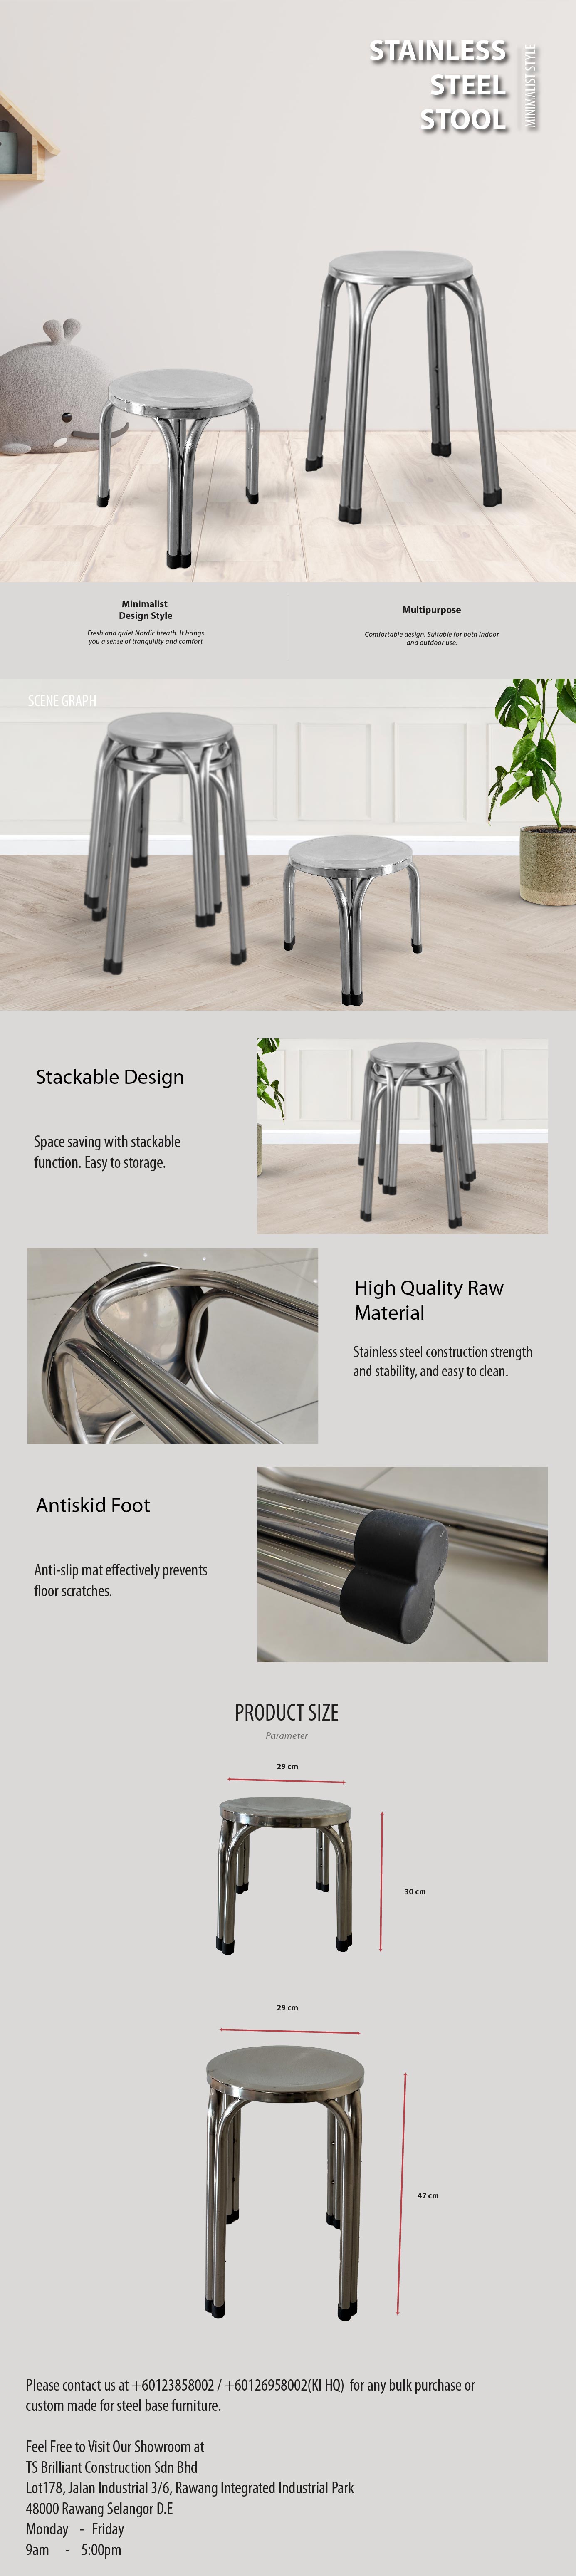 Description -30 stainless steel stool-01